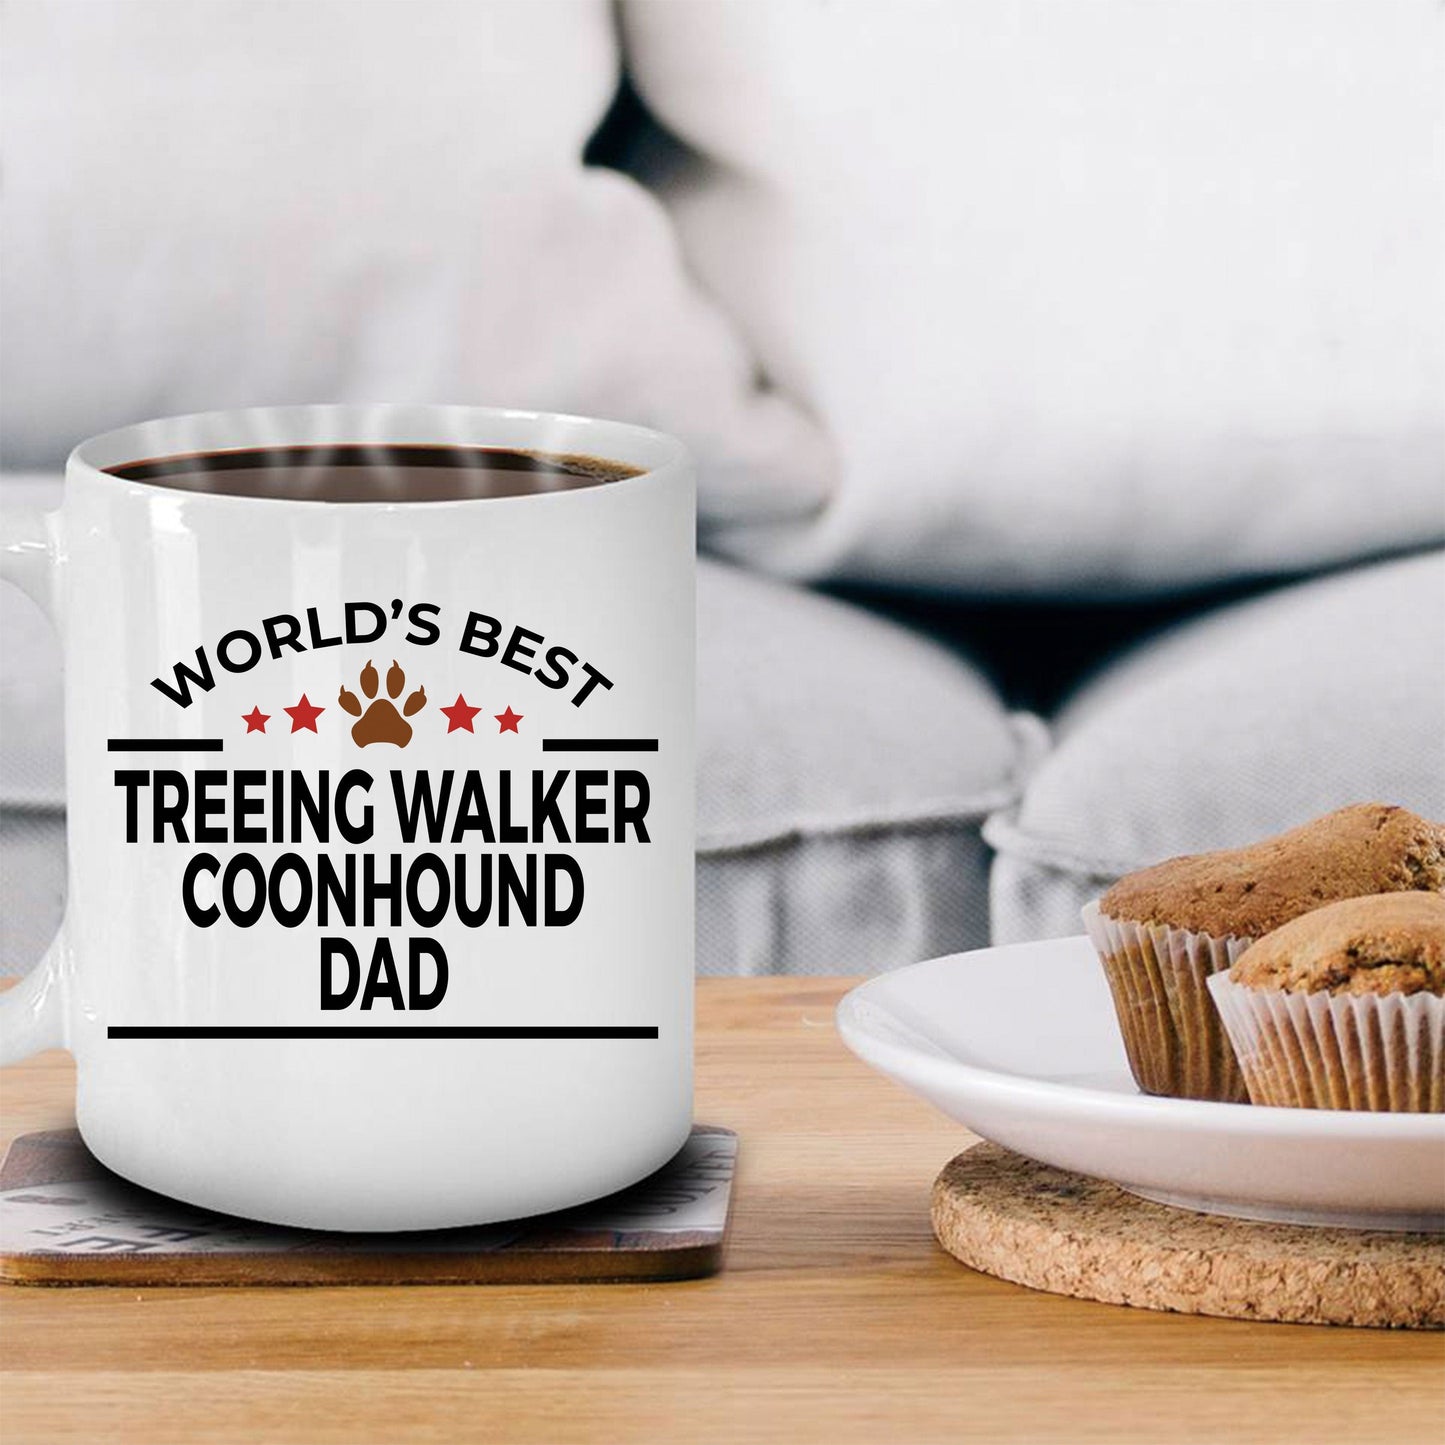 Treeing Walker Coonhound Dog Dad Mug